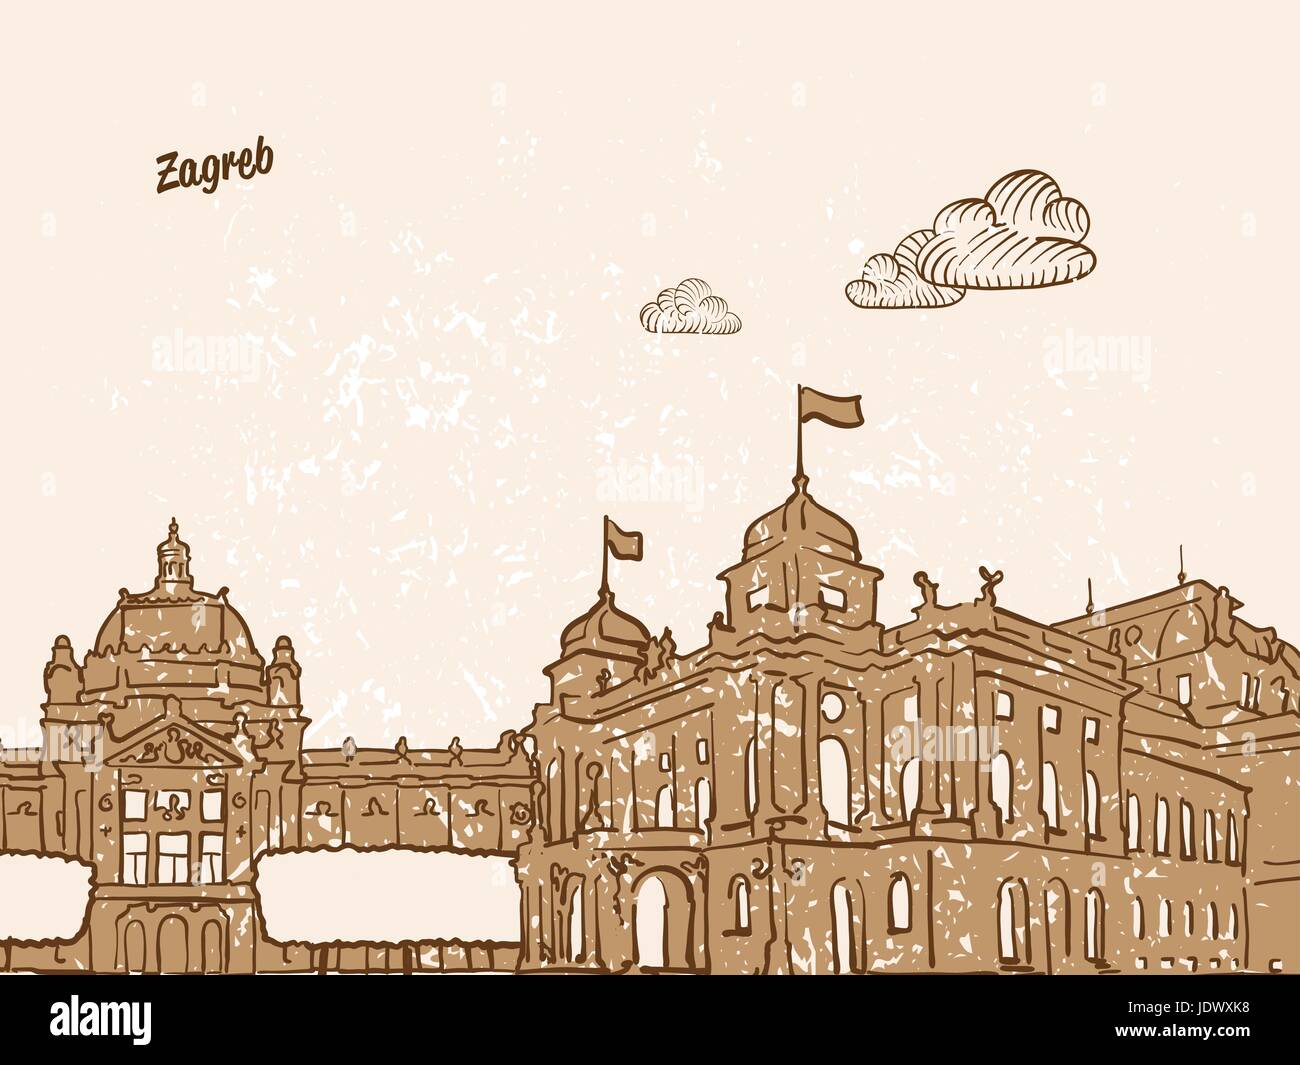 Zagreb, Croatia, Greeting Card, hand drawn image, famous european capital, vintage style, vector Illustration Stock Vector